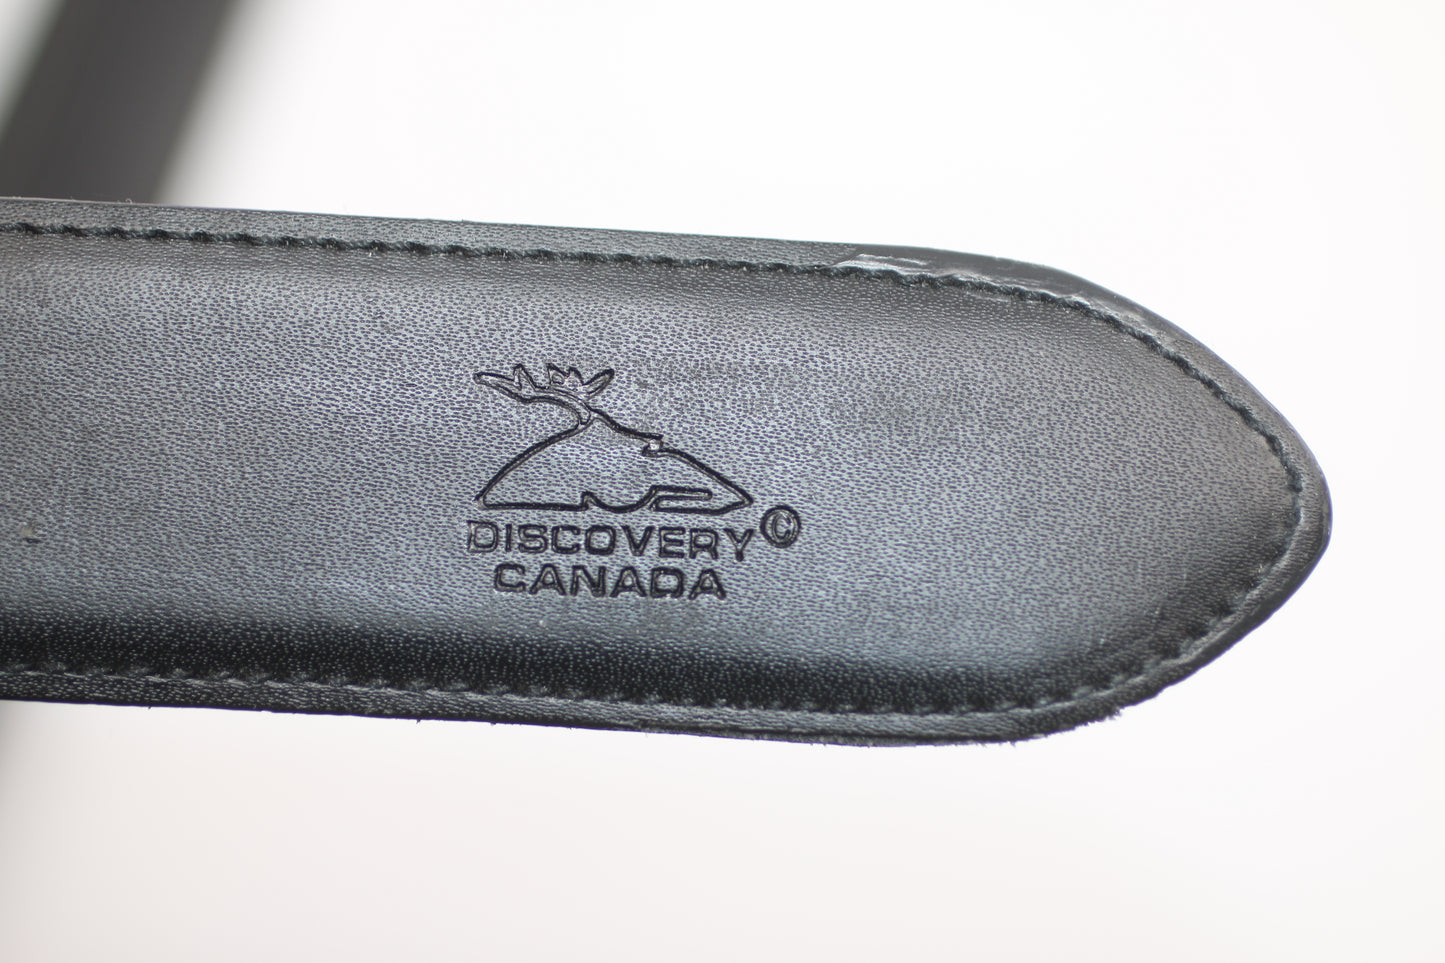 Vintage discovery Canada blACK belt W/ zipper IN BACK